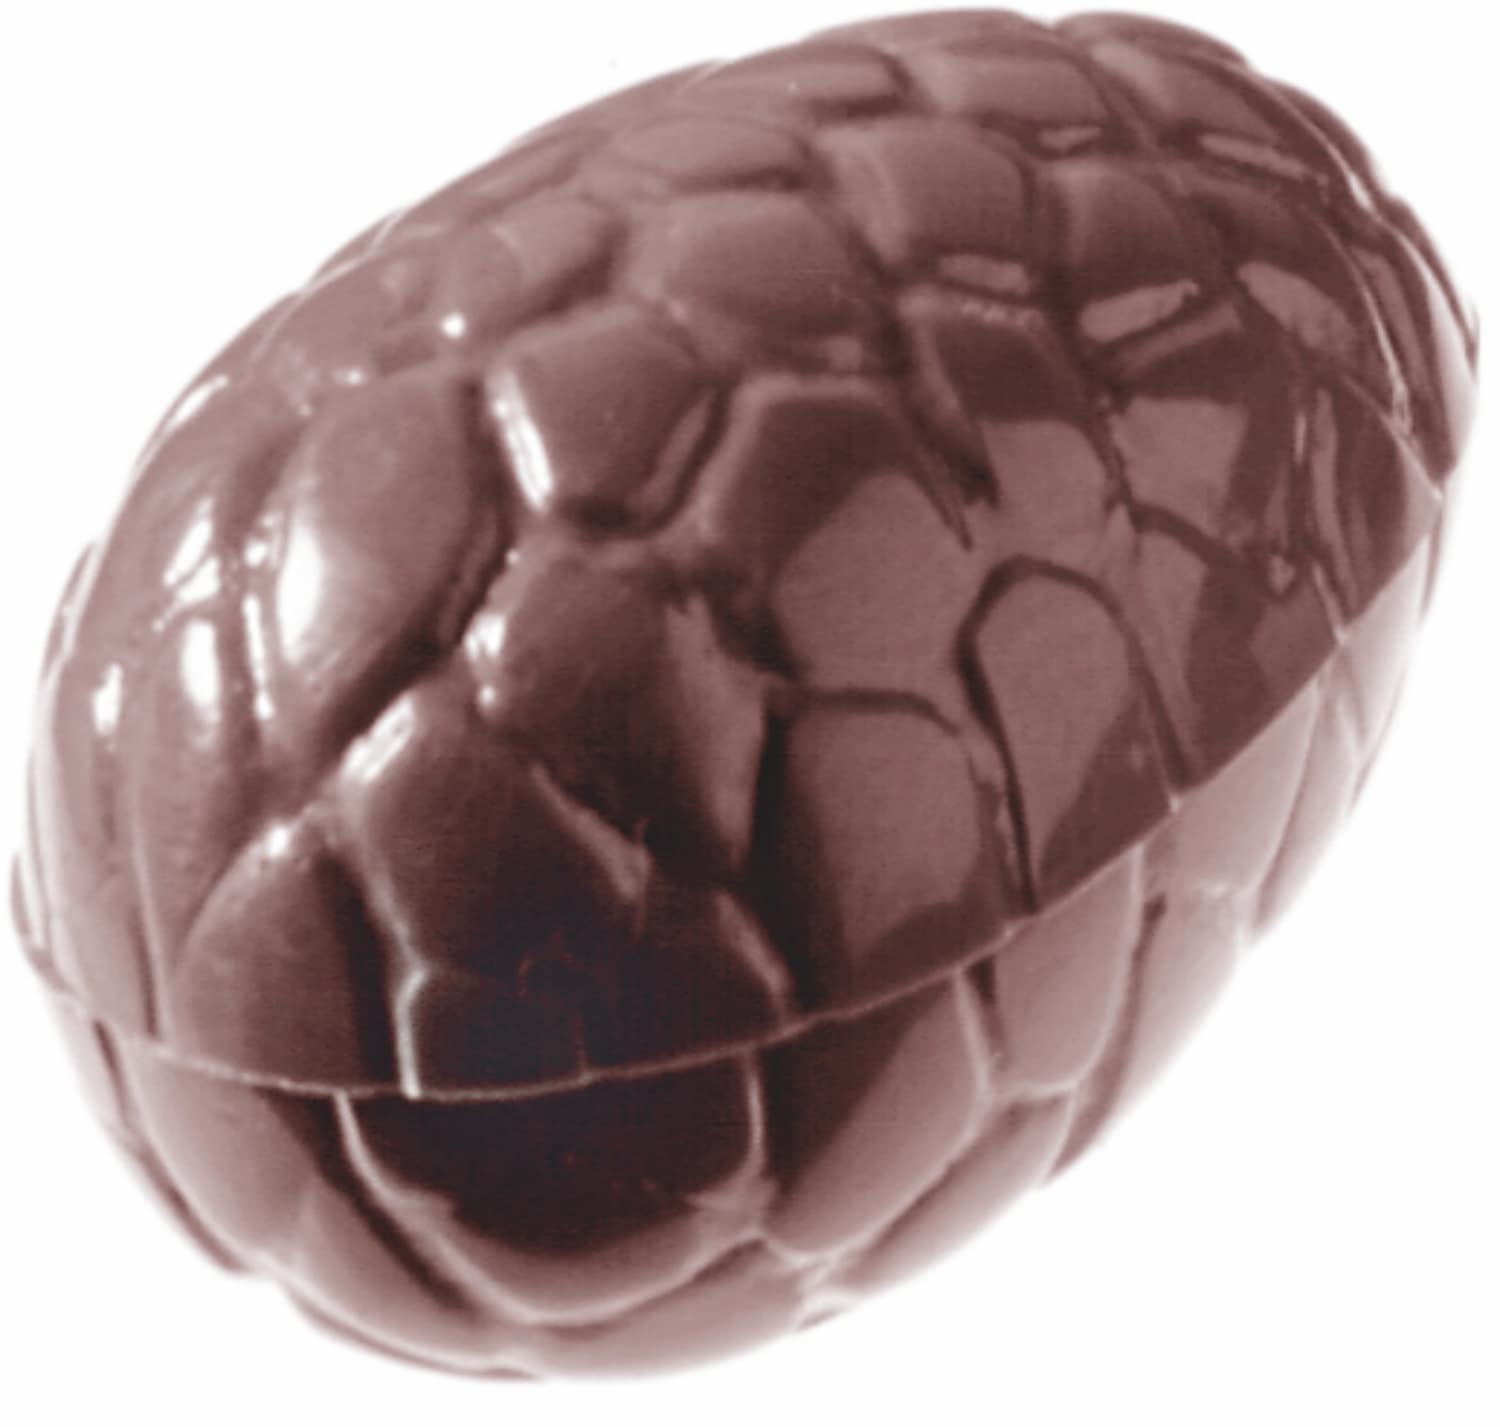 Schokoladenform "Osterei" 421050 421050